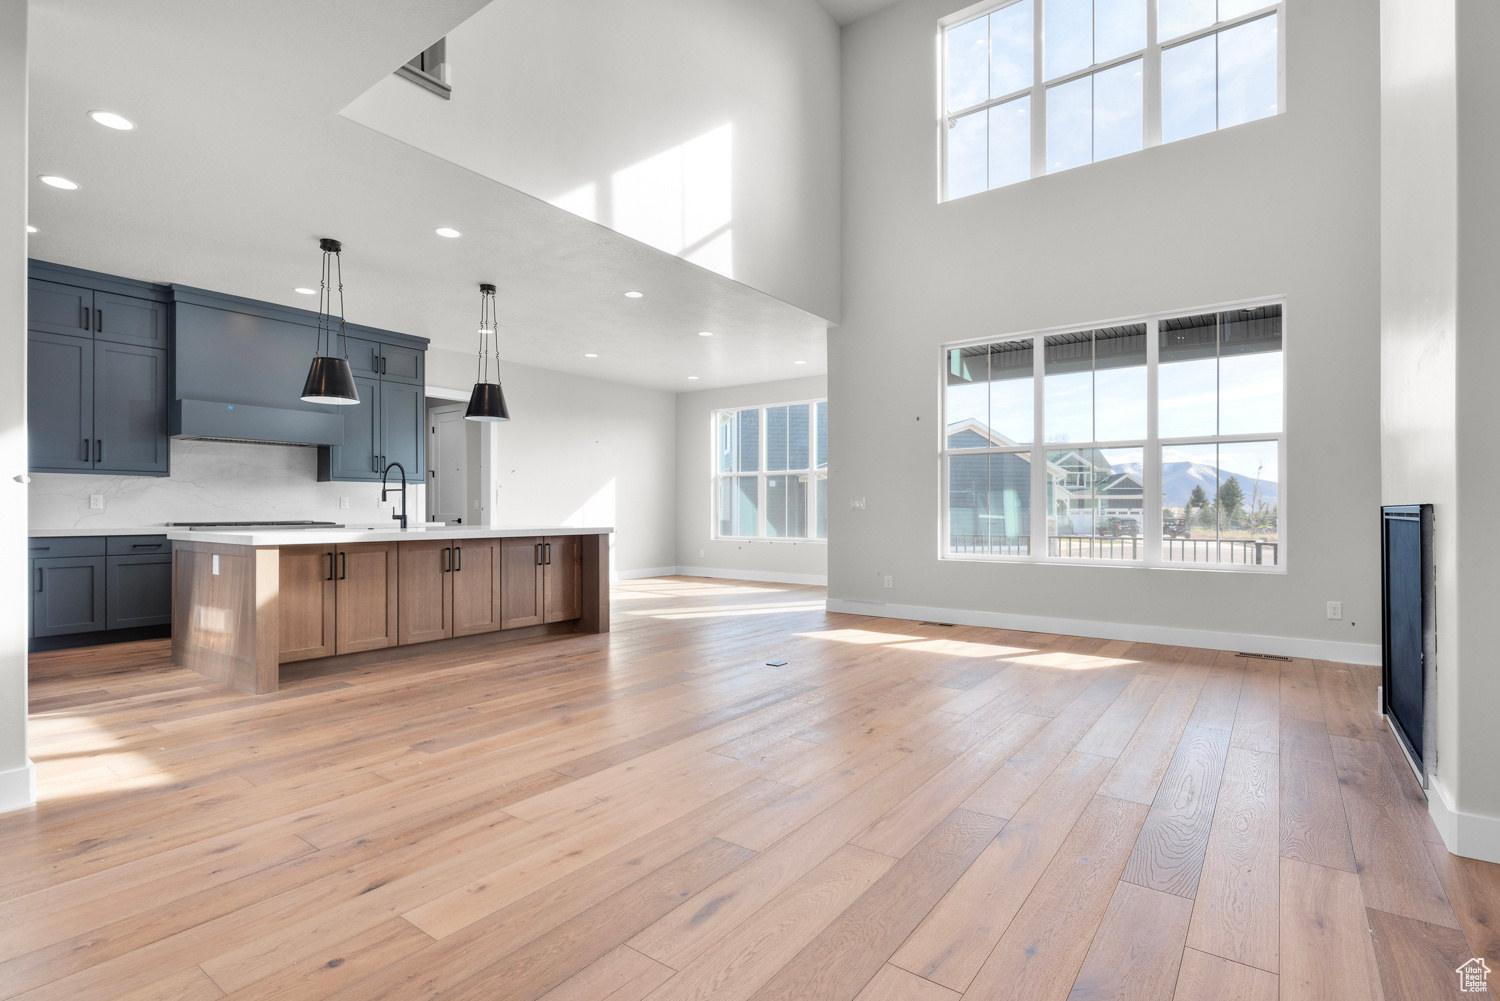 Kitchen featuring hanging light fixtures, light hardwood / wood-style flooring, tasteful backsplash, and a kitchen island with sink